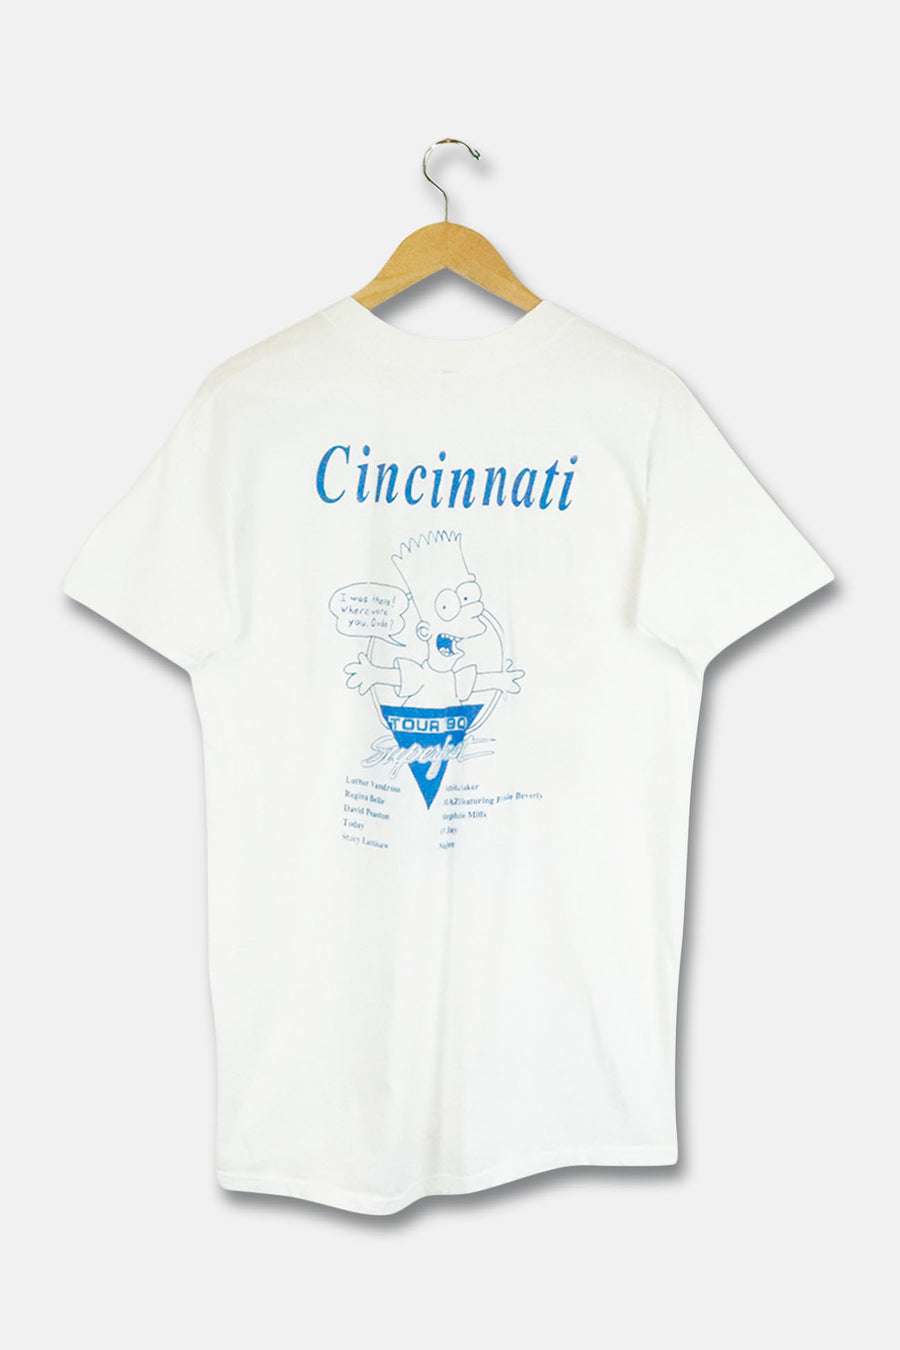 Vintage 1990 Cincinnati Superfest T Shirt Sz L